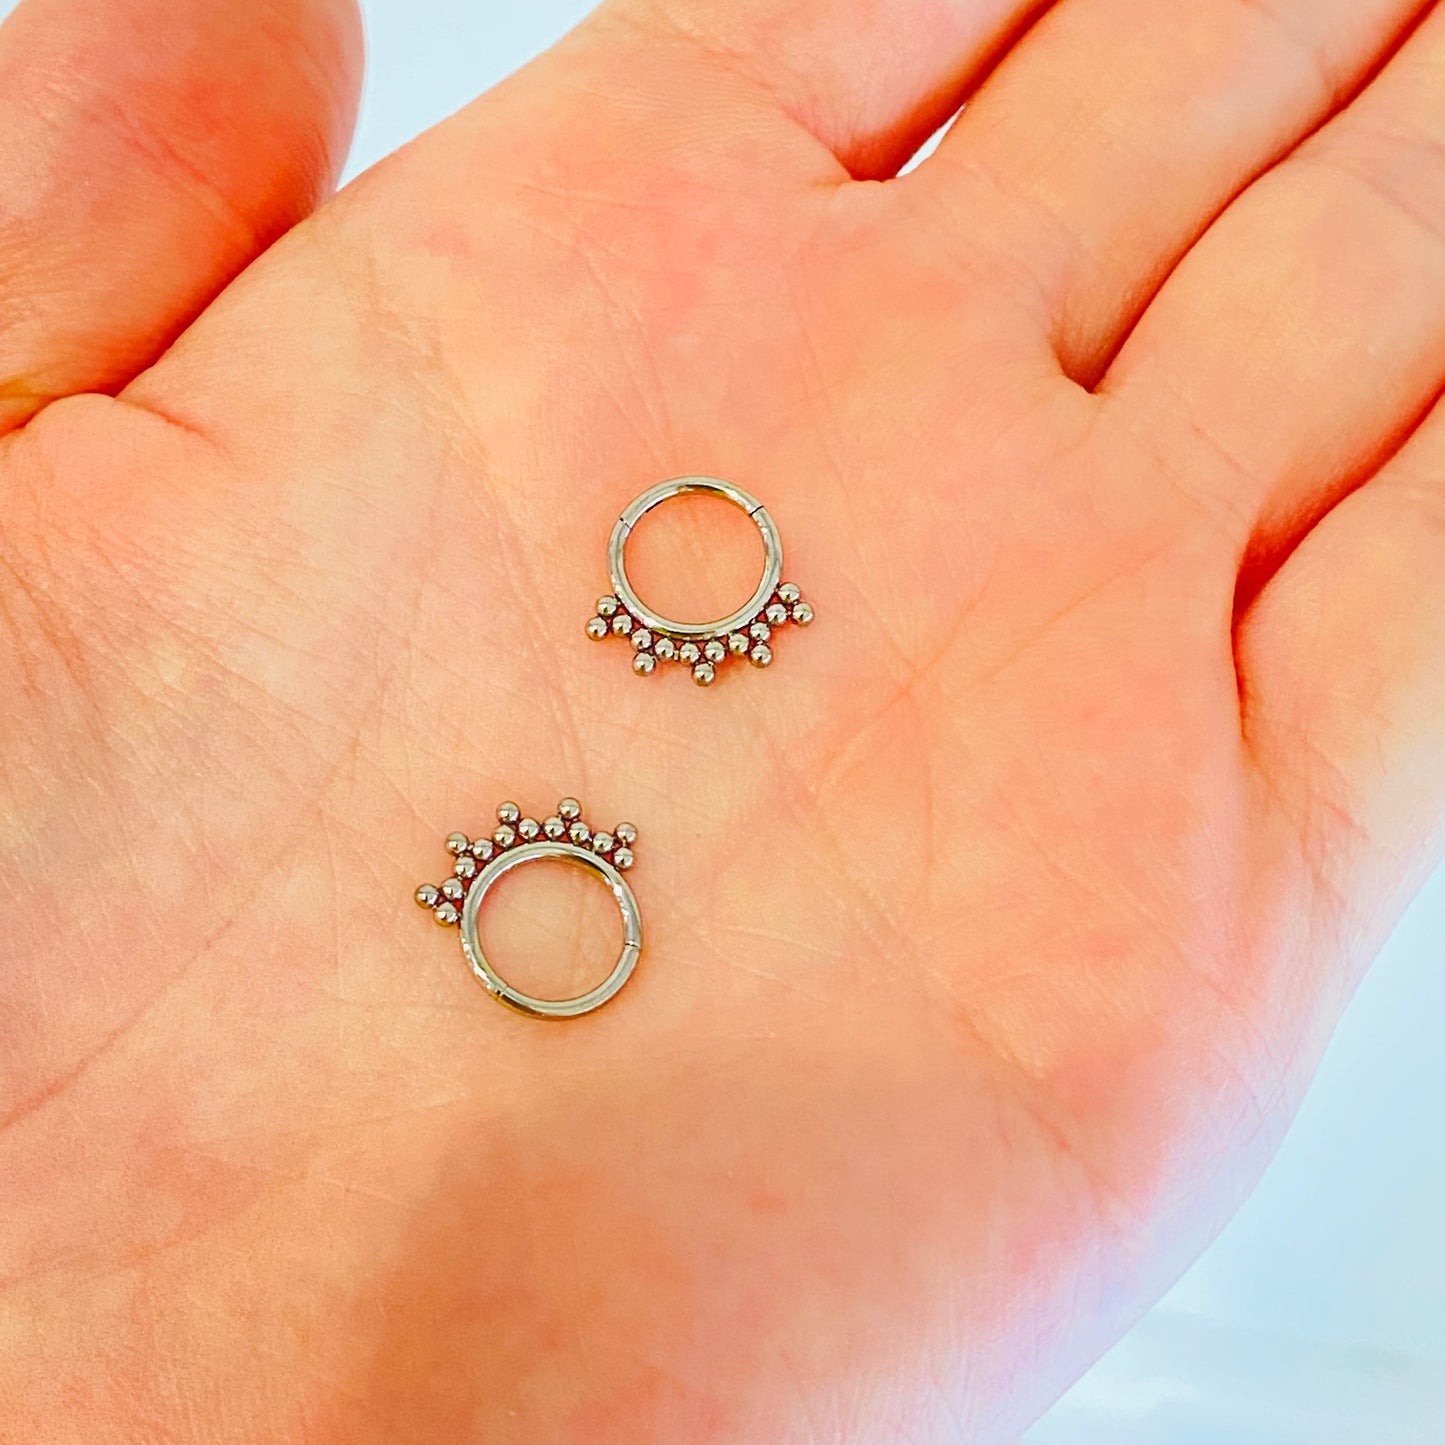 G23 Titanium Outer Crown Beads Hinged Segment Clicker